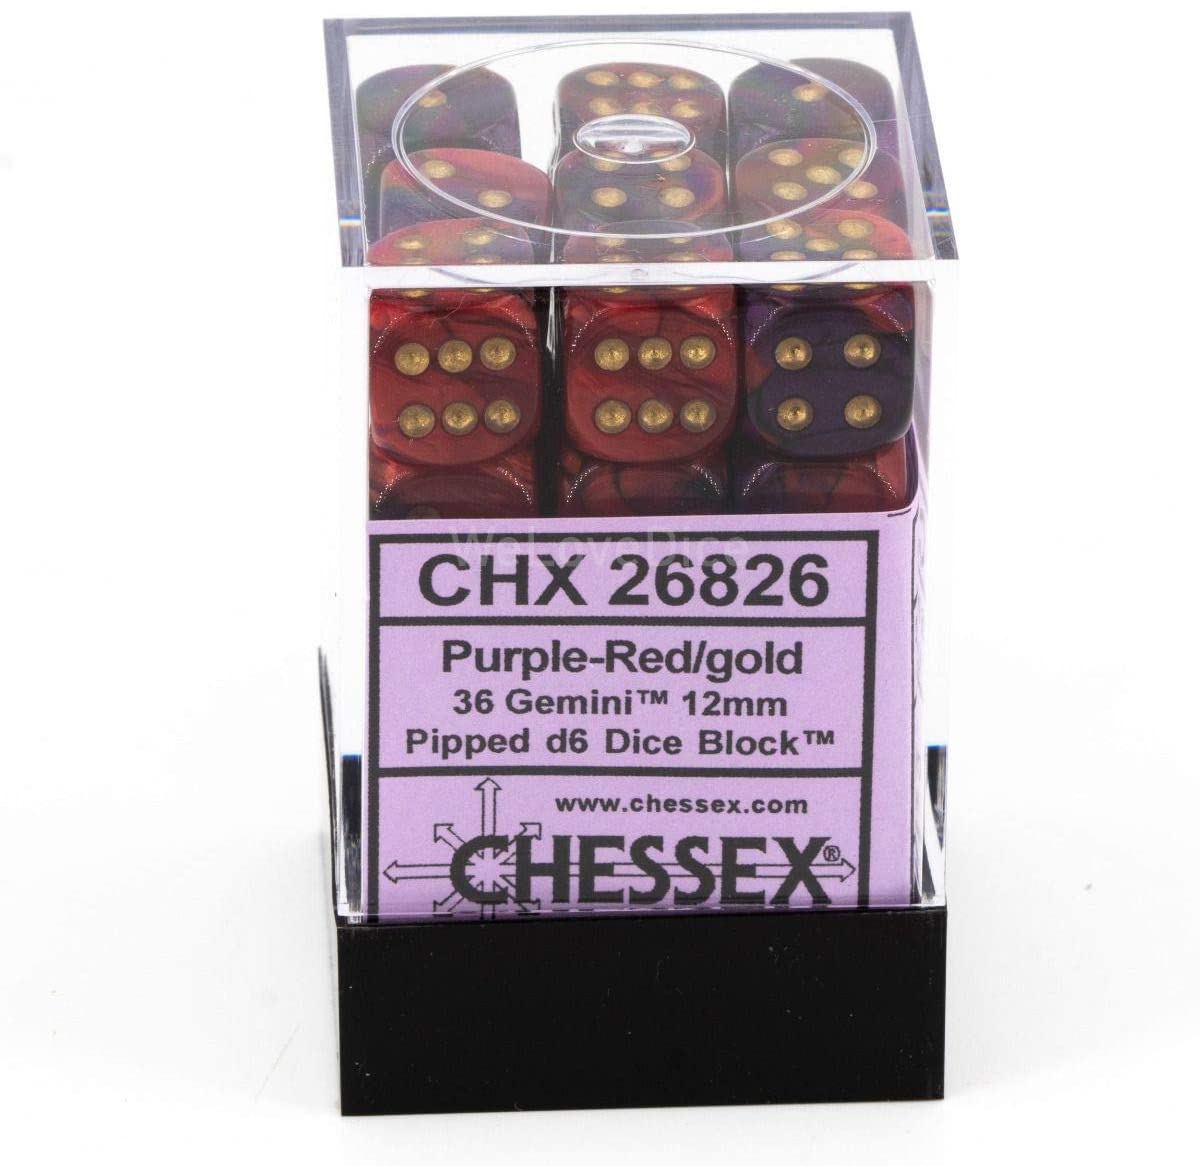 Chessex Dice: D6 Block 12mm - Gemini - Purple-Red with Gold (CHX 26826) - Gamescape